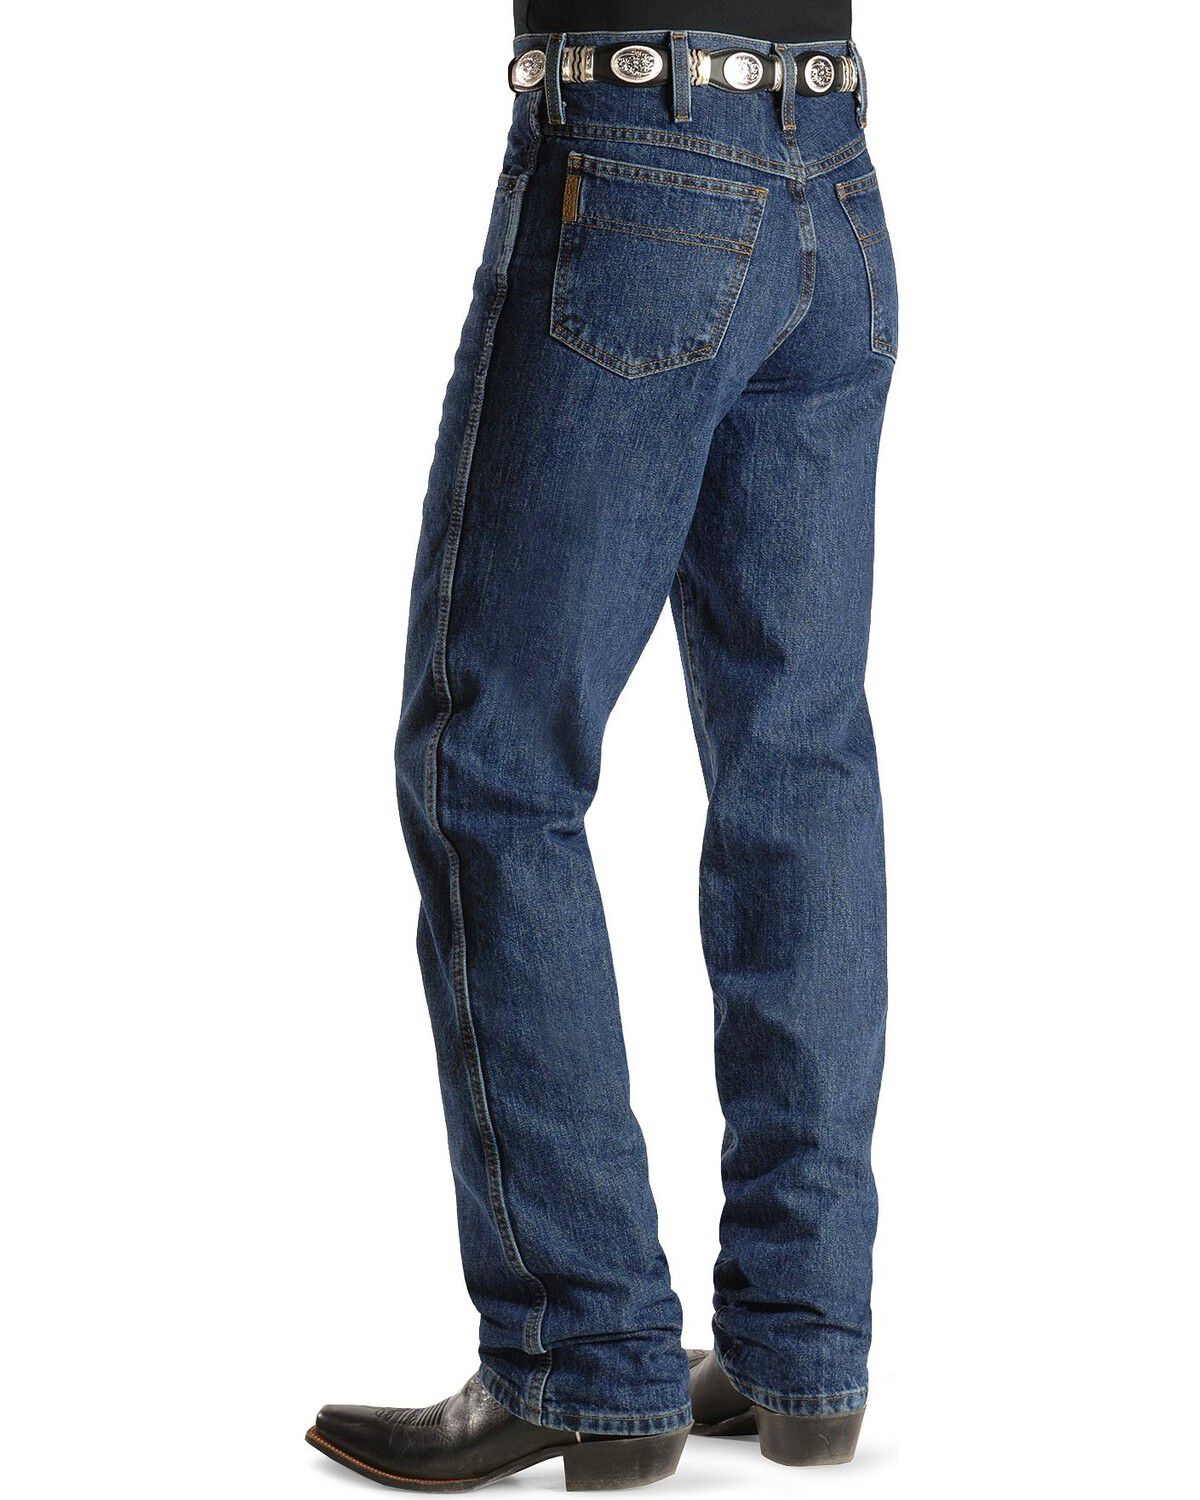 Cinch Jeans Size Chart